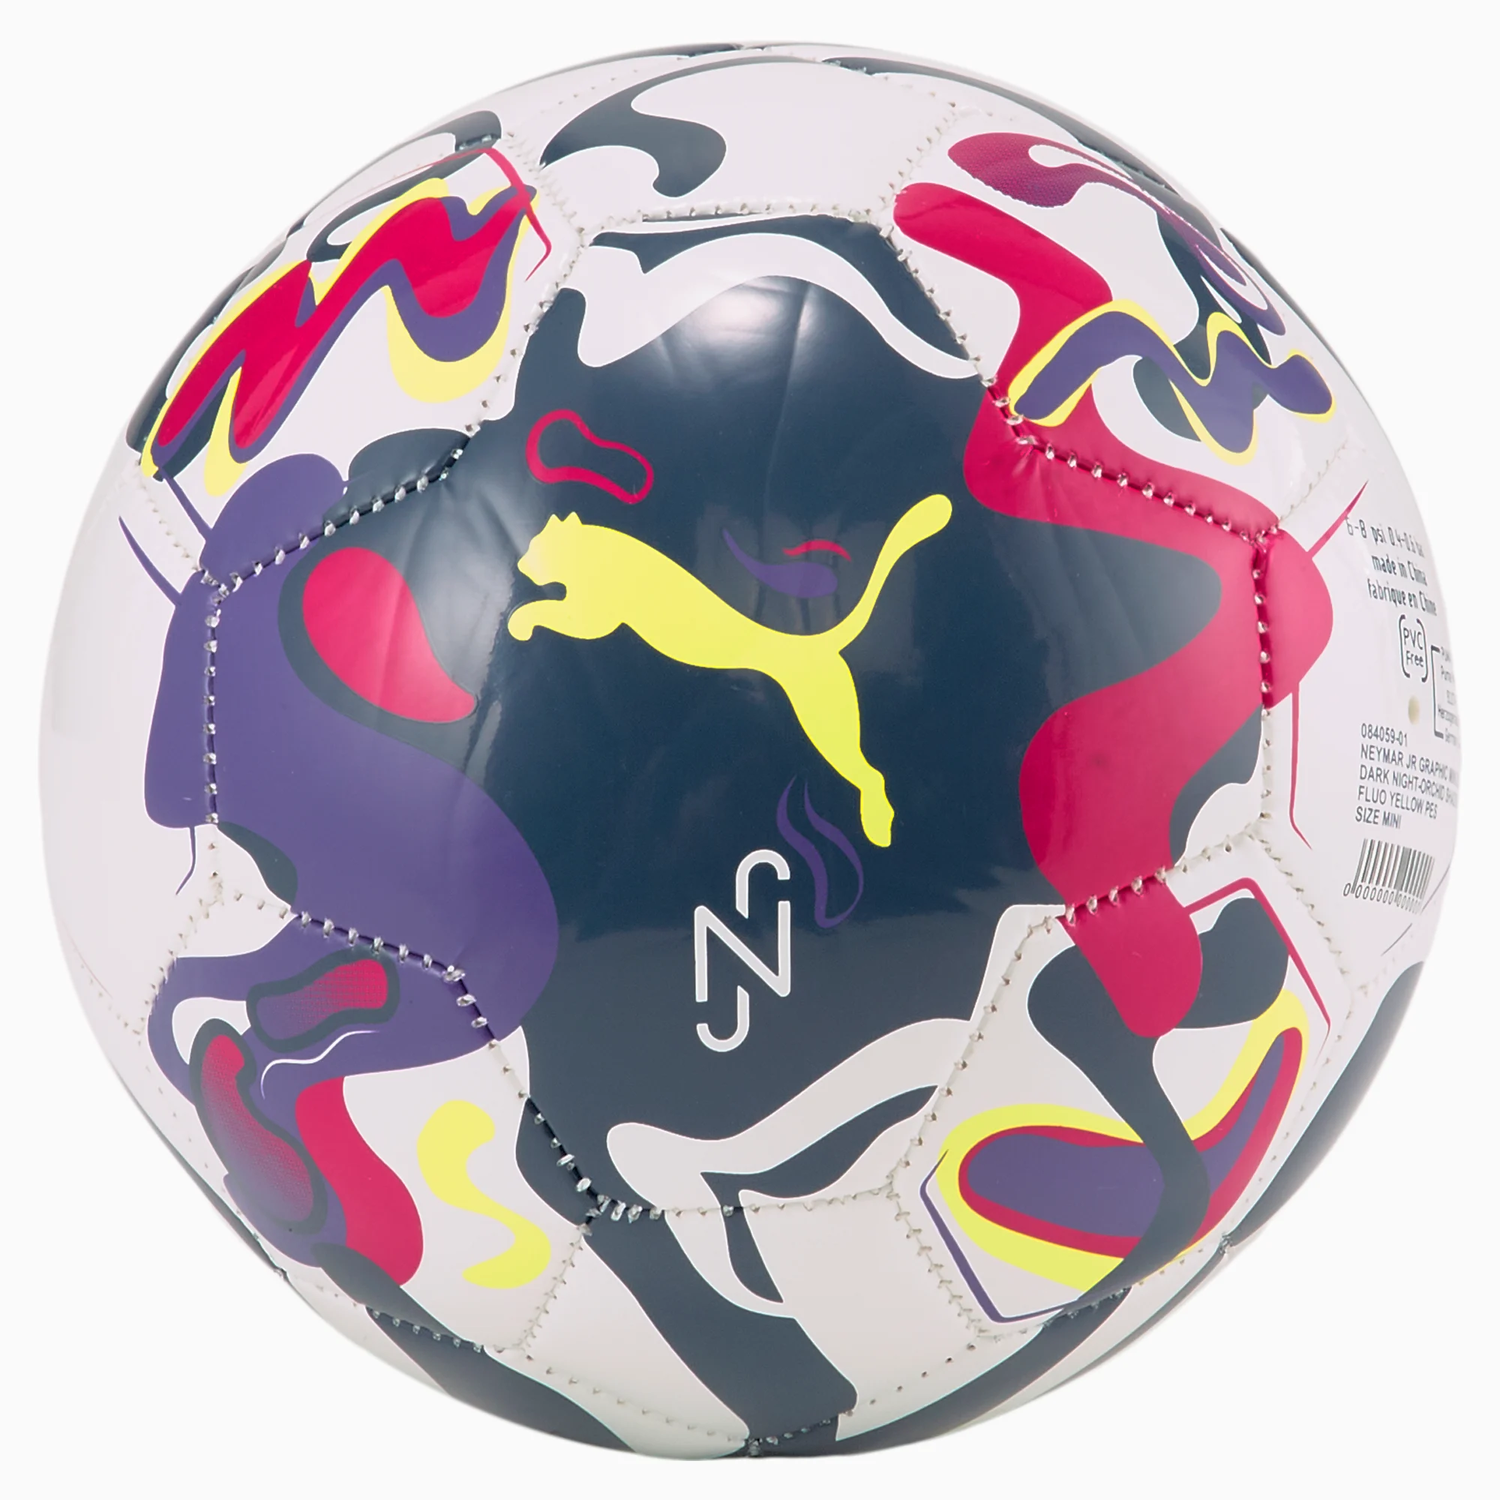 Puma Neymar Jr Graphic Mini Ball - Dark Night-Orchid Shadow-Fluro Yellow (Back)